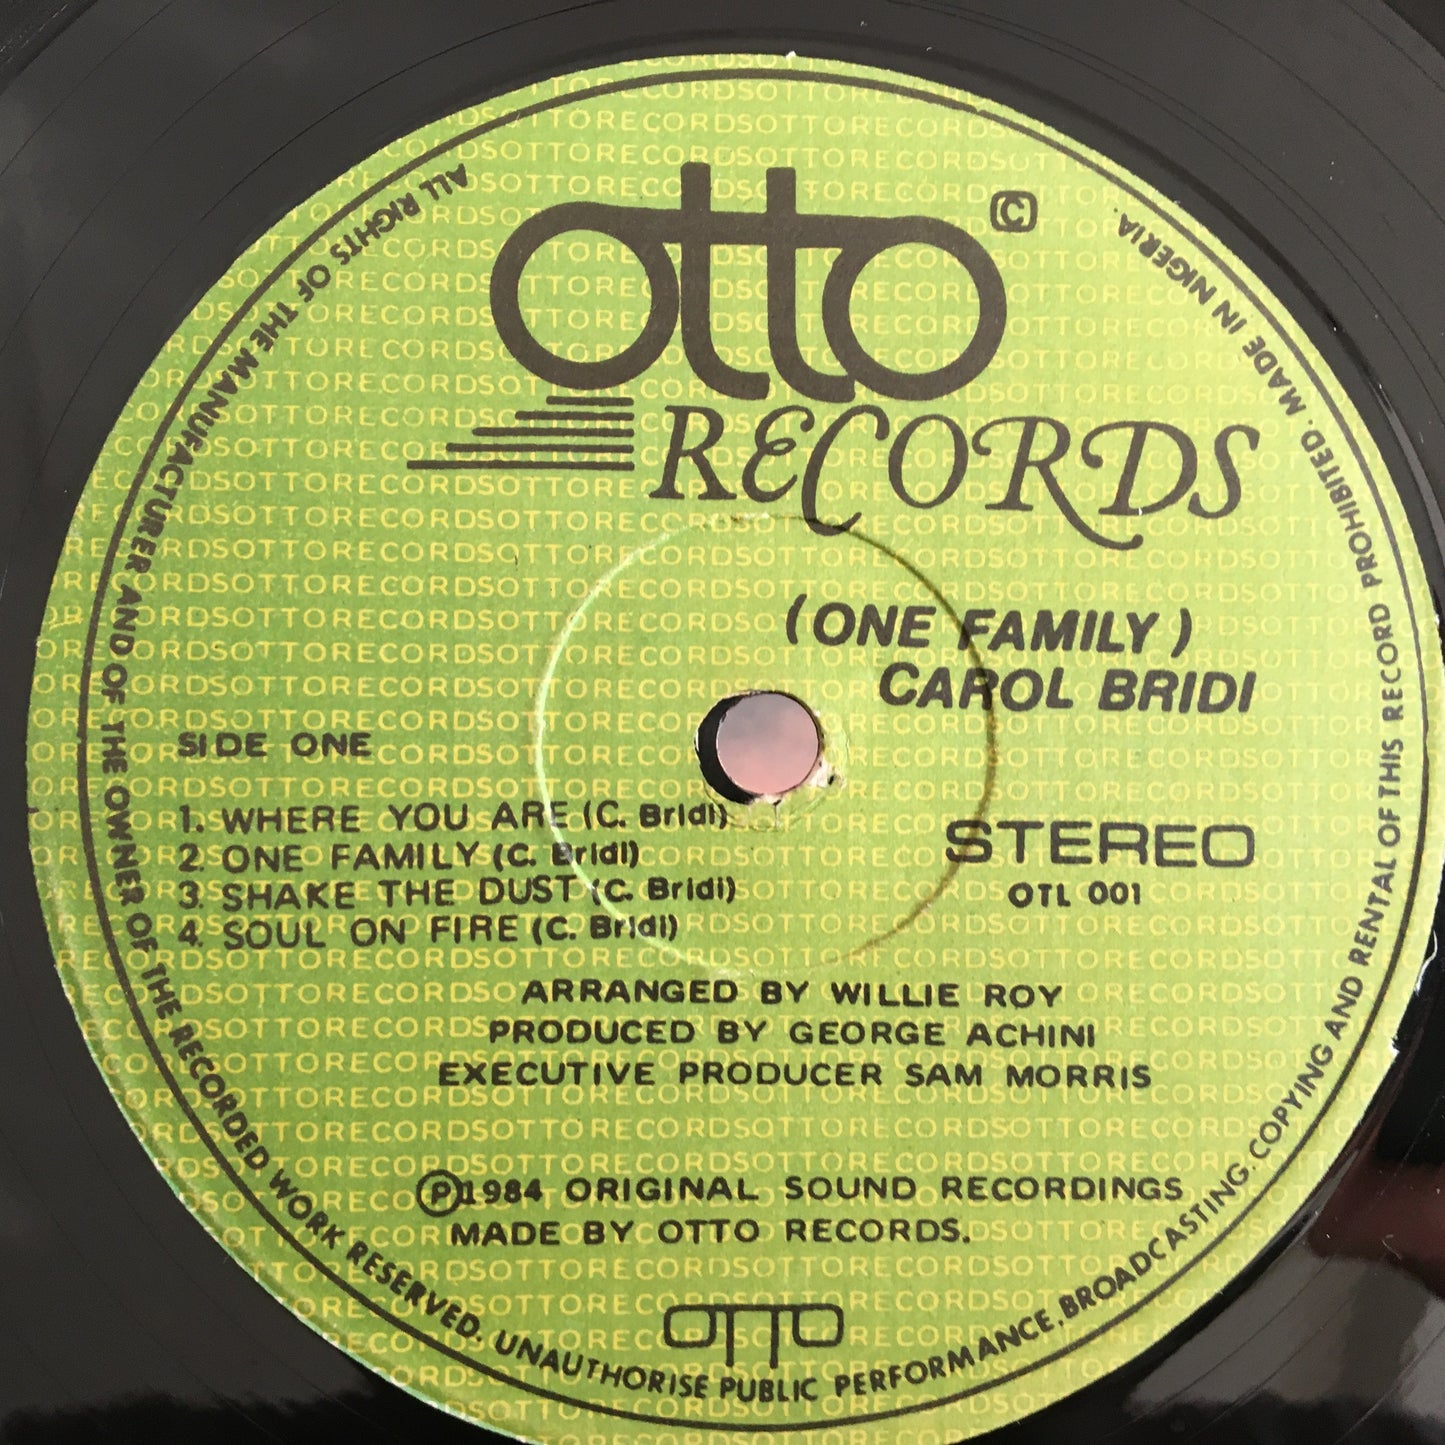 Carol Bridi - One Family